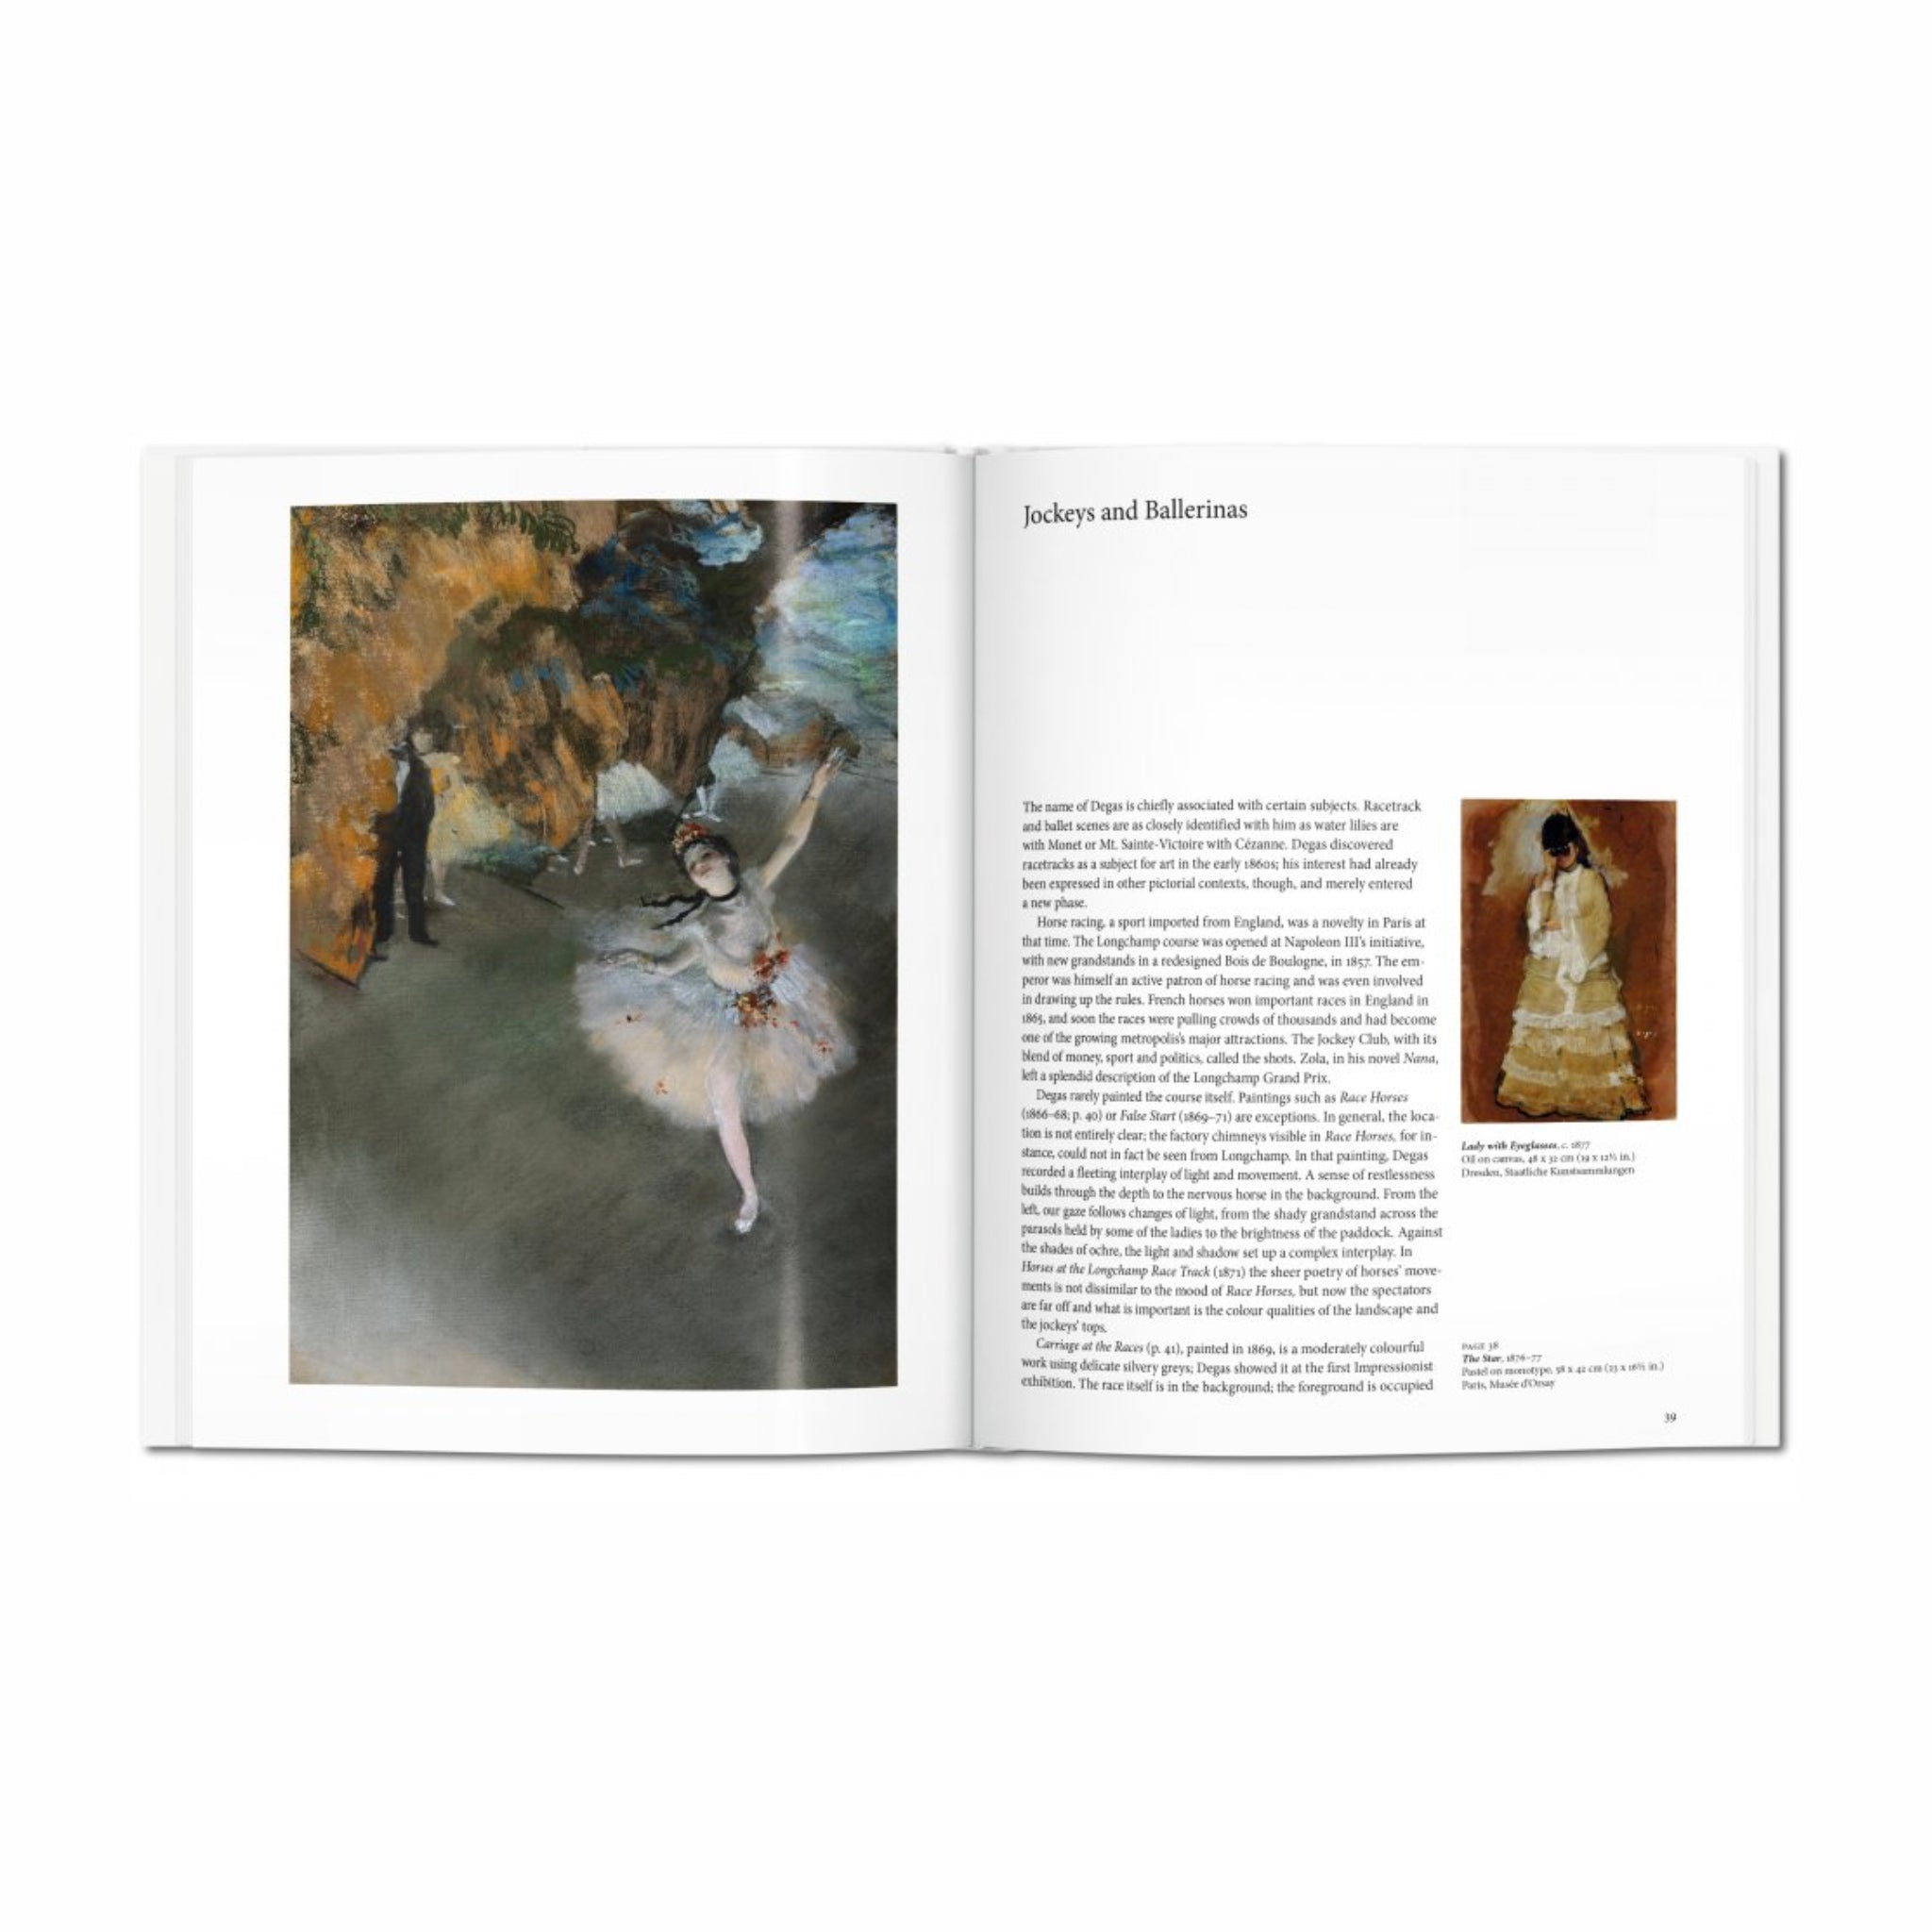 Taschen, Taschen Edgar Degas (copertina rigida)